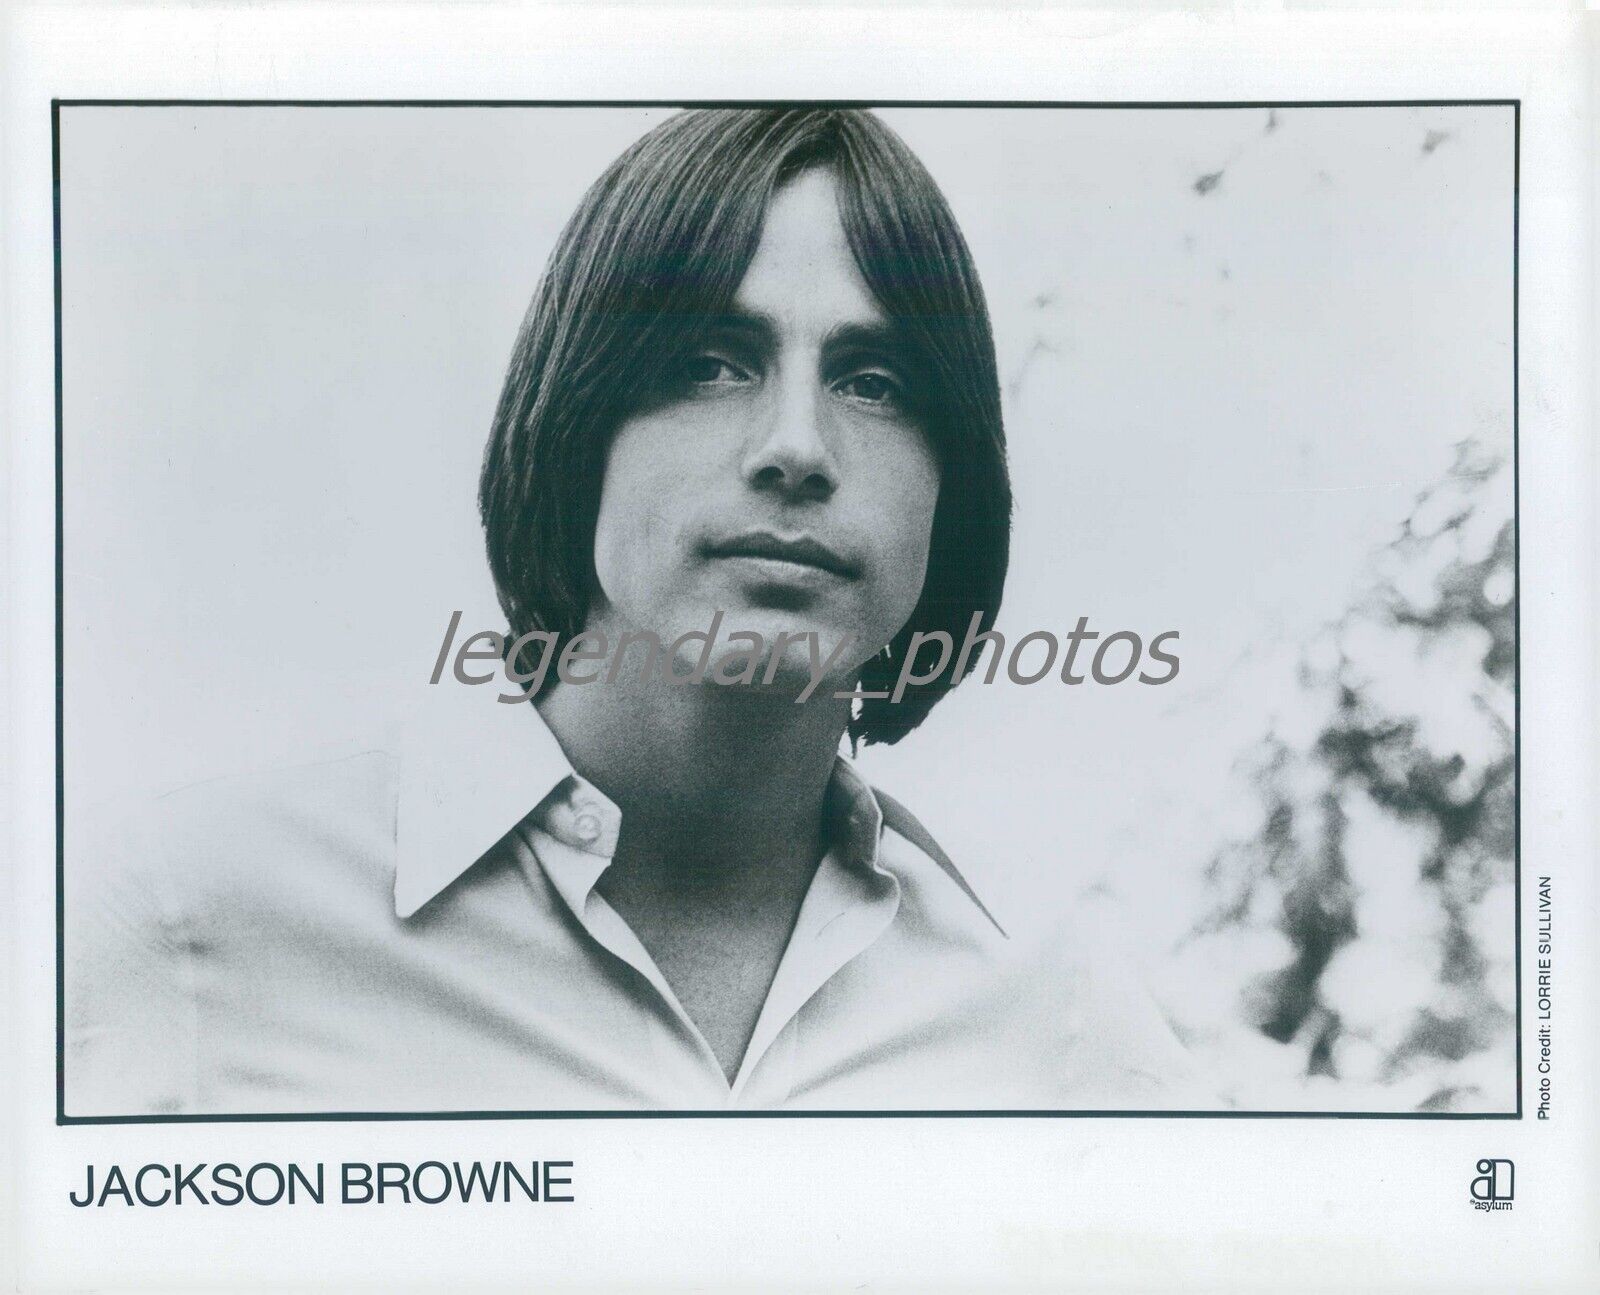 1978 Portrait of Singer Songwriter Jackson Browne Original News Service Photo